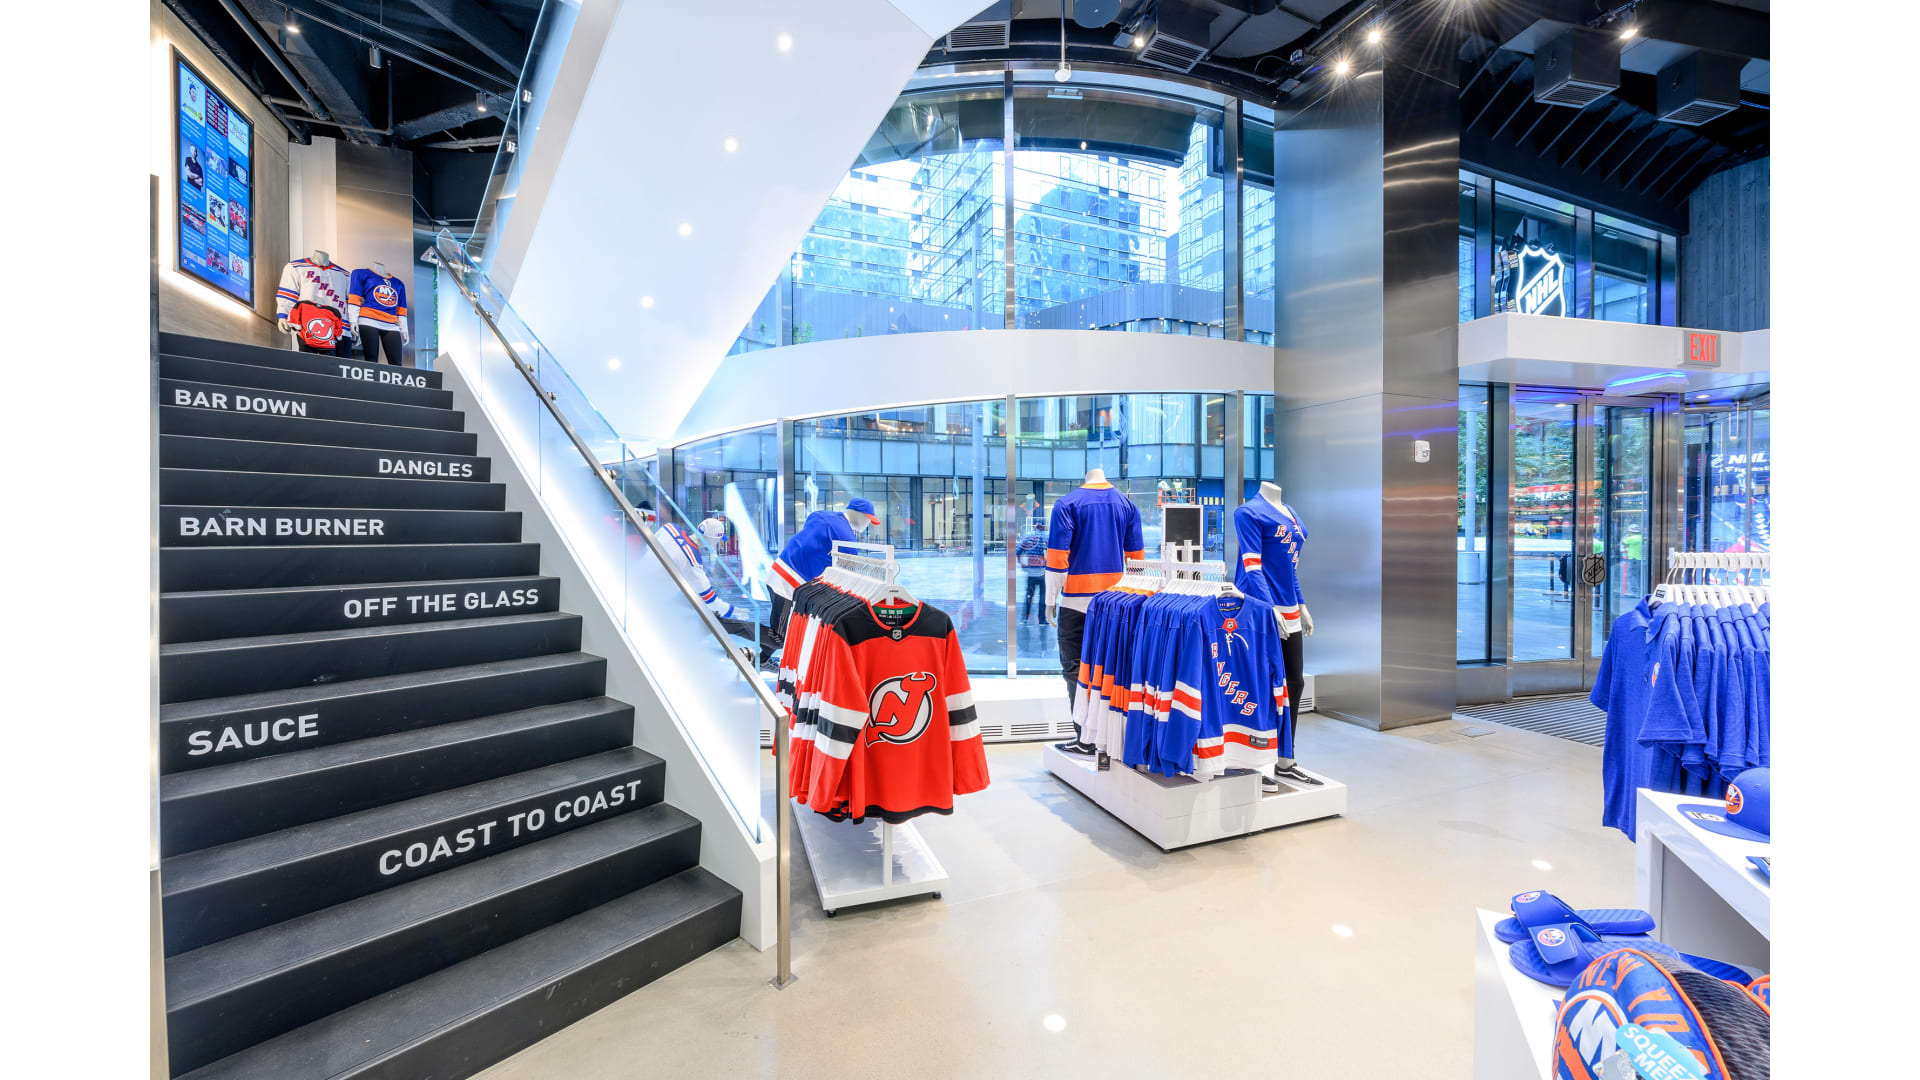 NHL jerseys everywhere, NHL Store